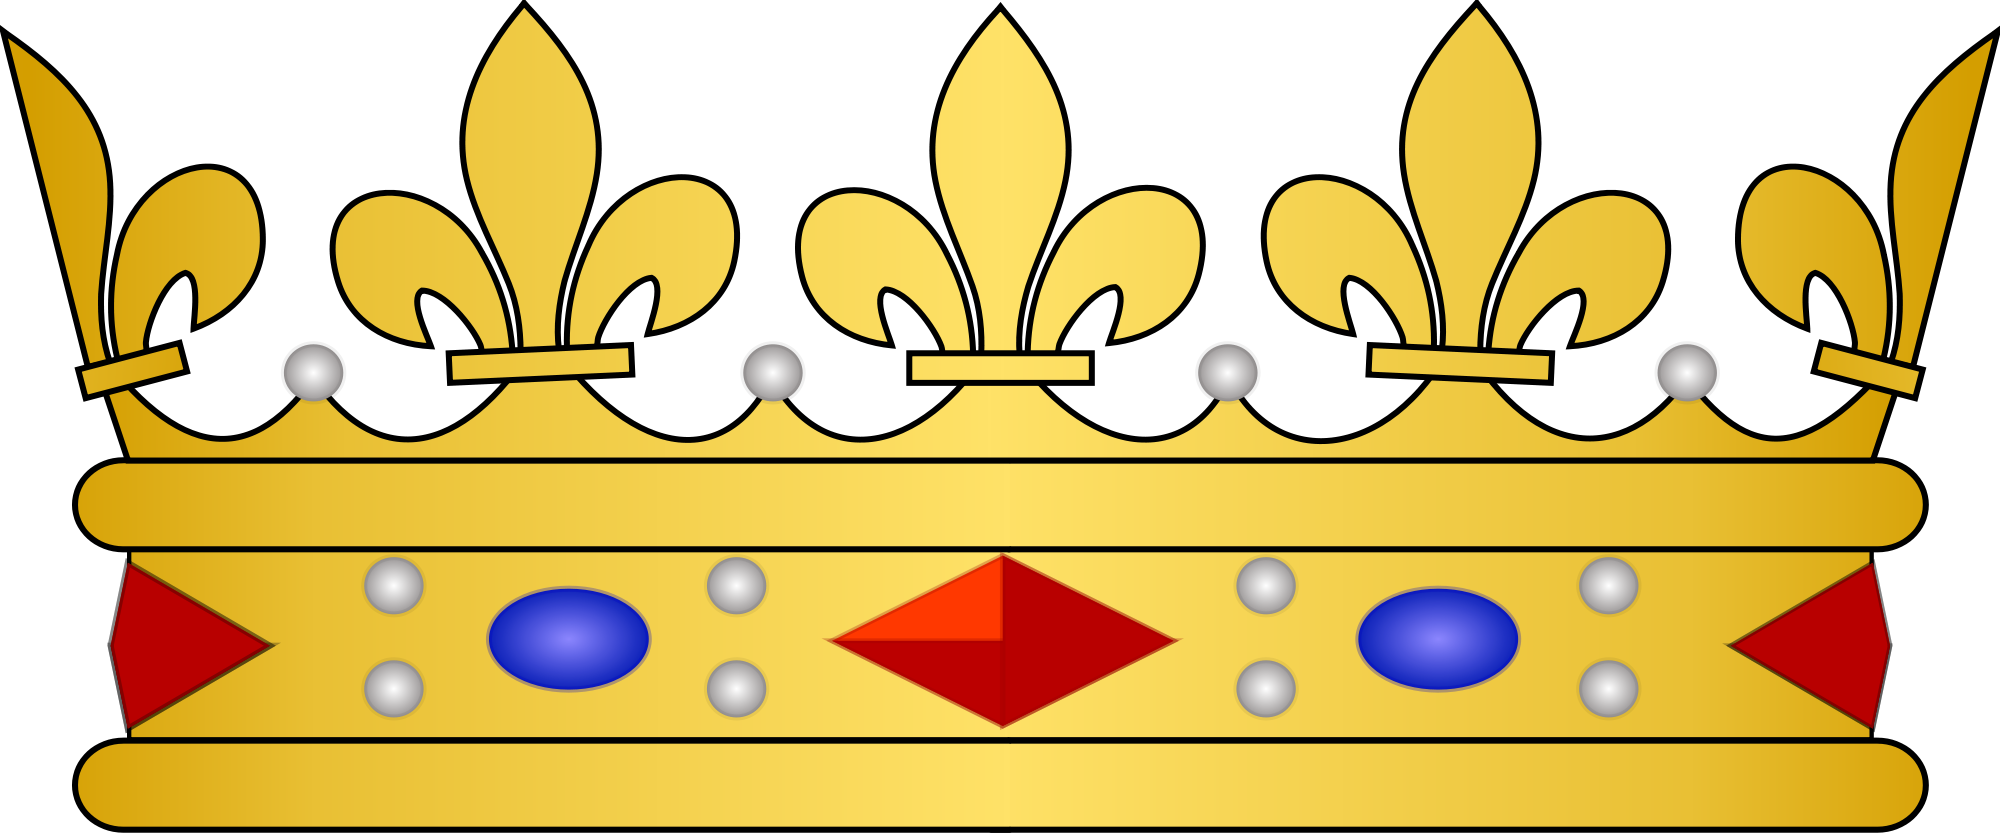 Golden Prince Crown صورة PNG مجانية